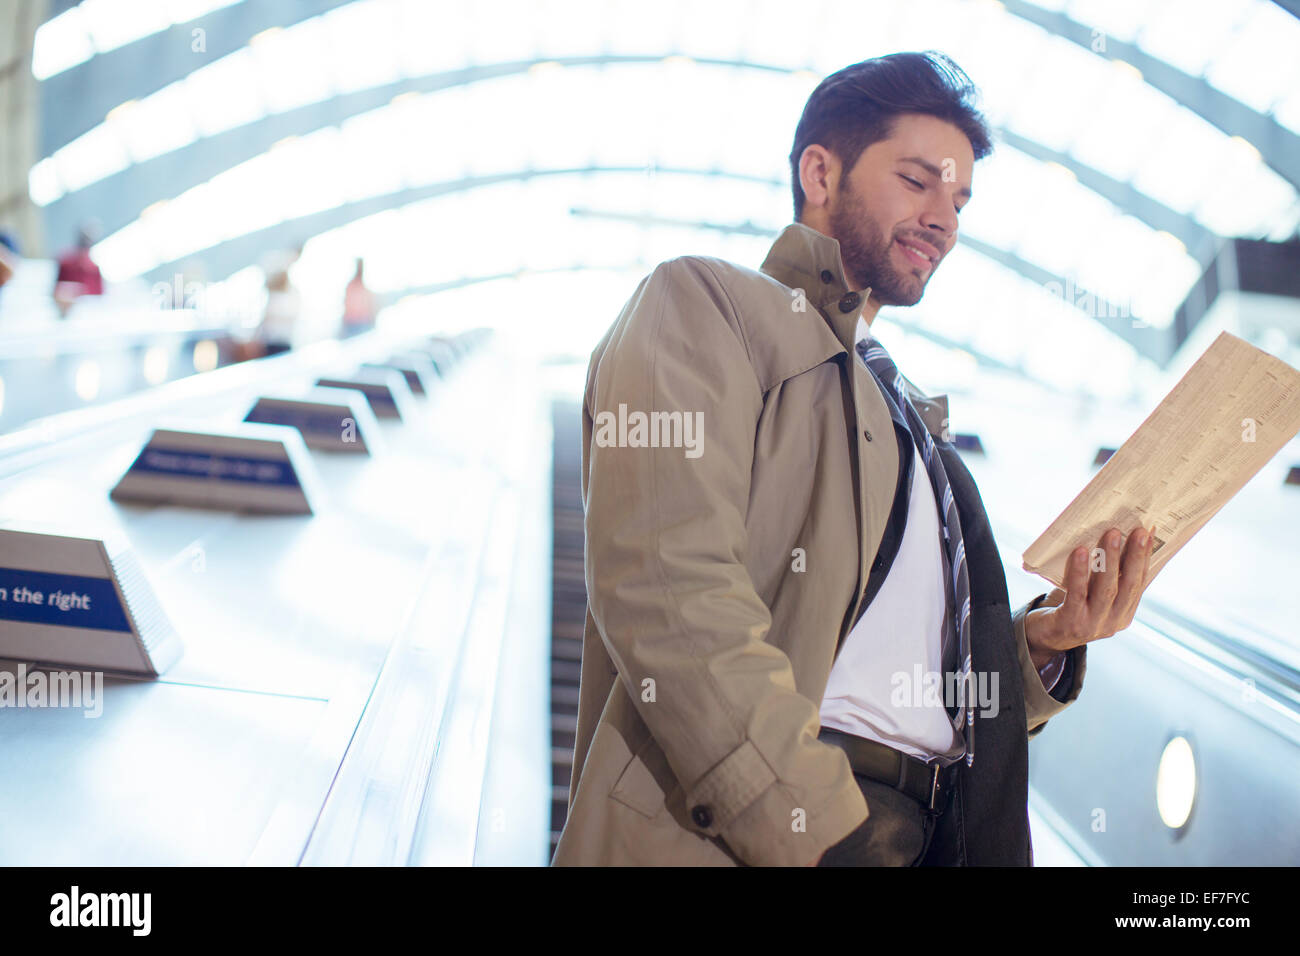 Businessman reading newspaper on escalator Banque D'Images